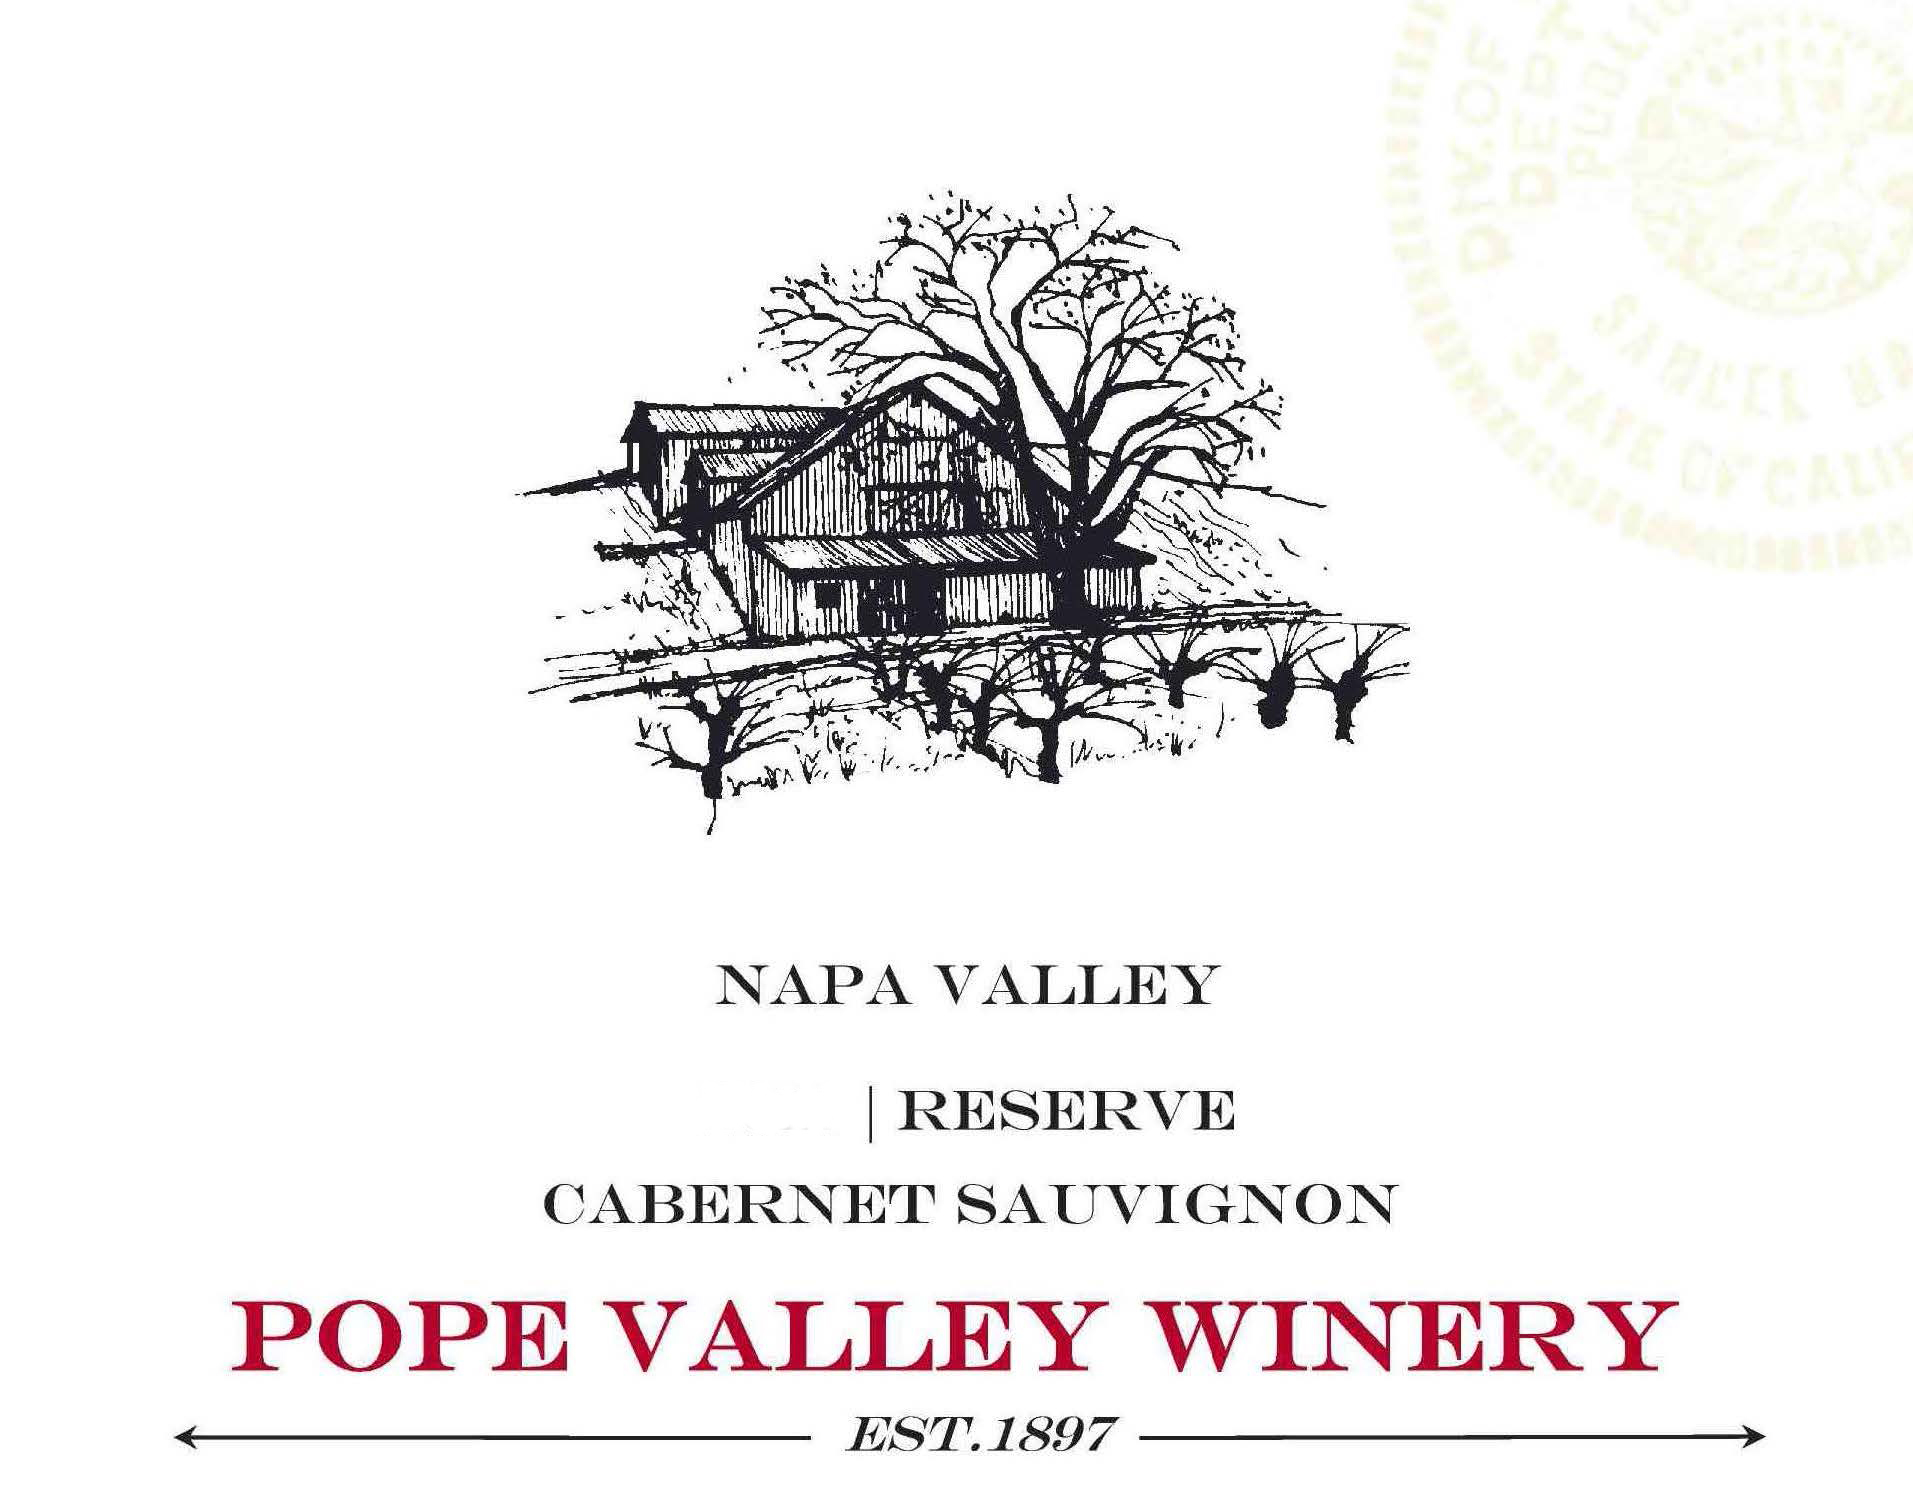 Pope Valley Winery - Cabernet Sauvignon Reserve - Napa label